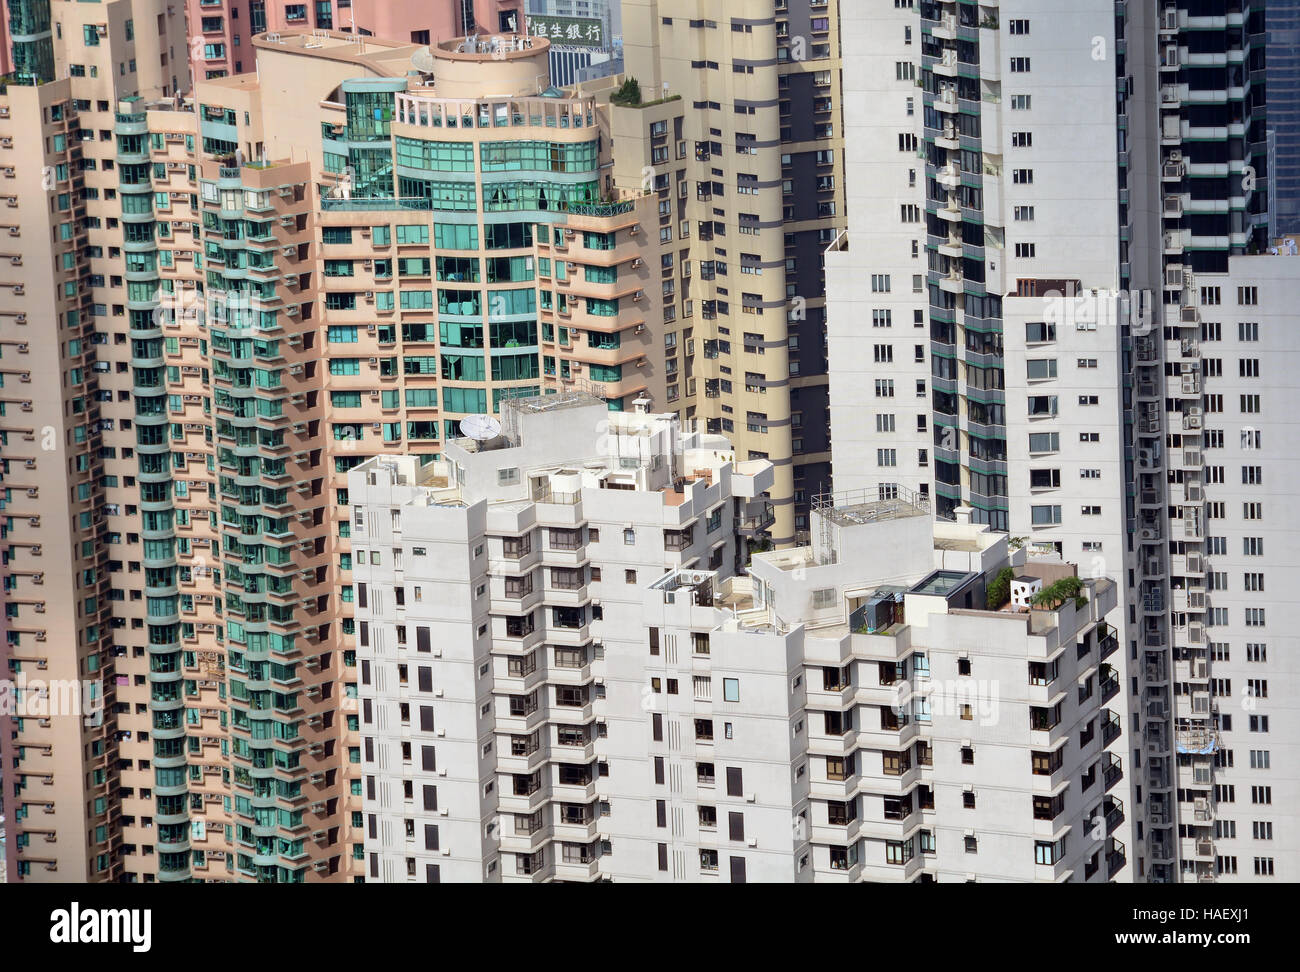 Wohnquartier Hong Kong Insel China Stockfoto